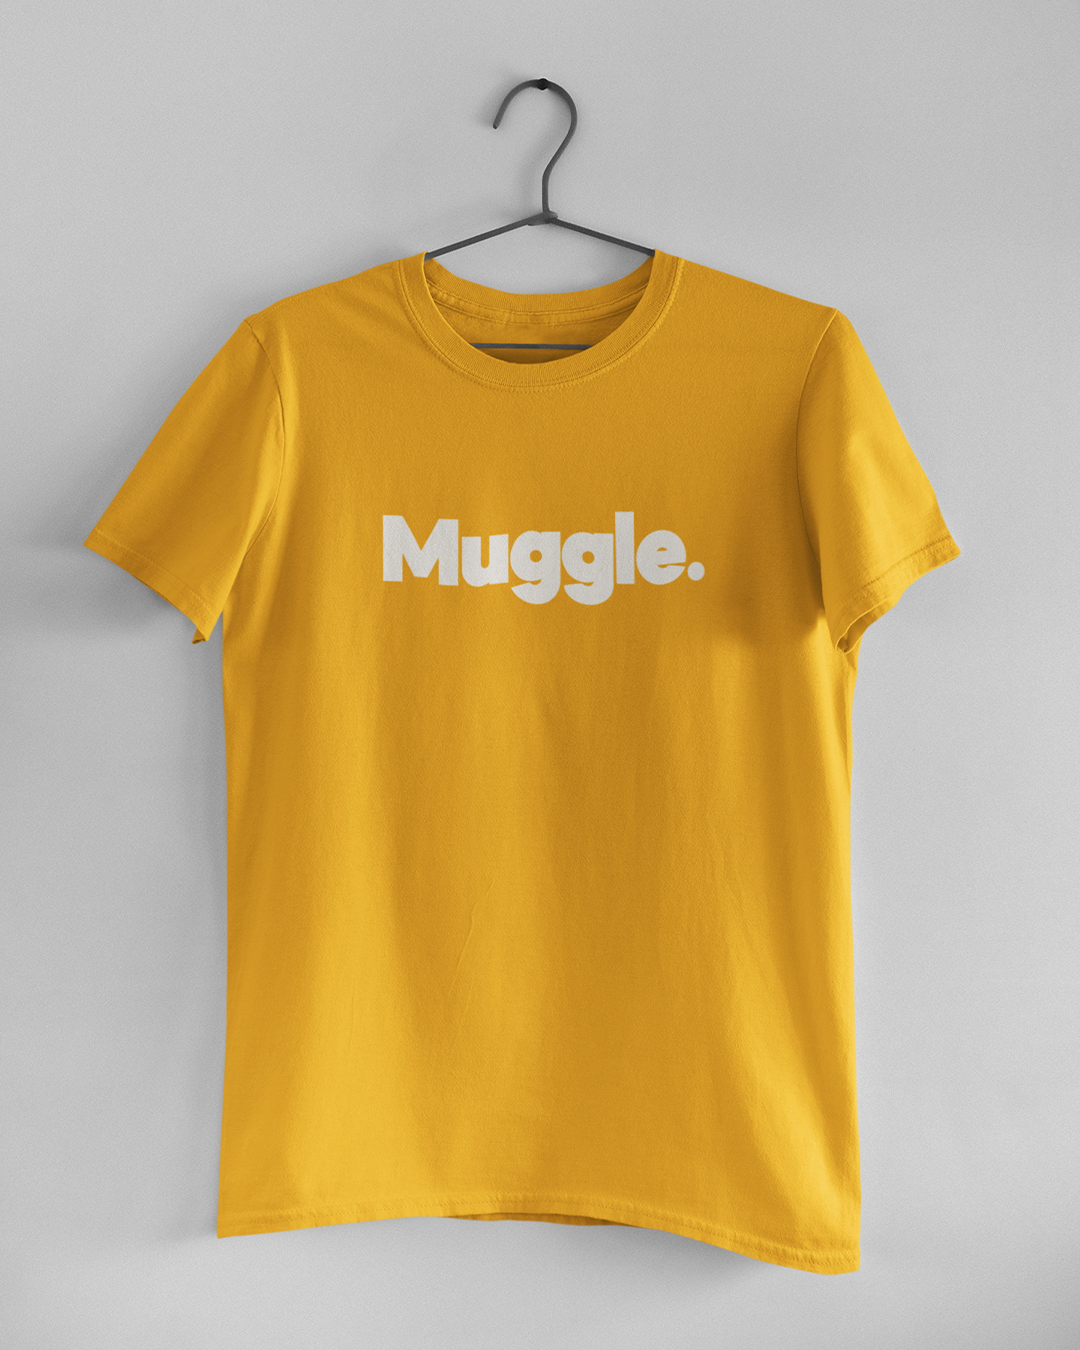 Muggle T-Shirt - Harry Potter Inspired T-Shirt - Wizarding World Muggle Inspired T-Shirt - Harry Potter Inspired T-Shirt